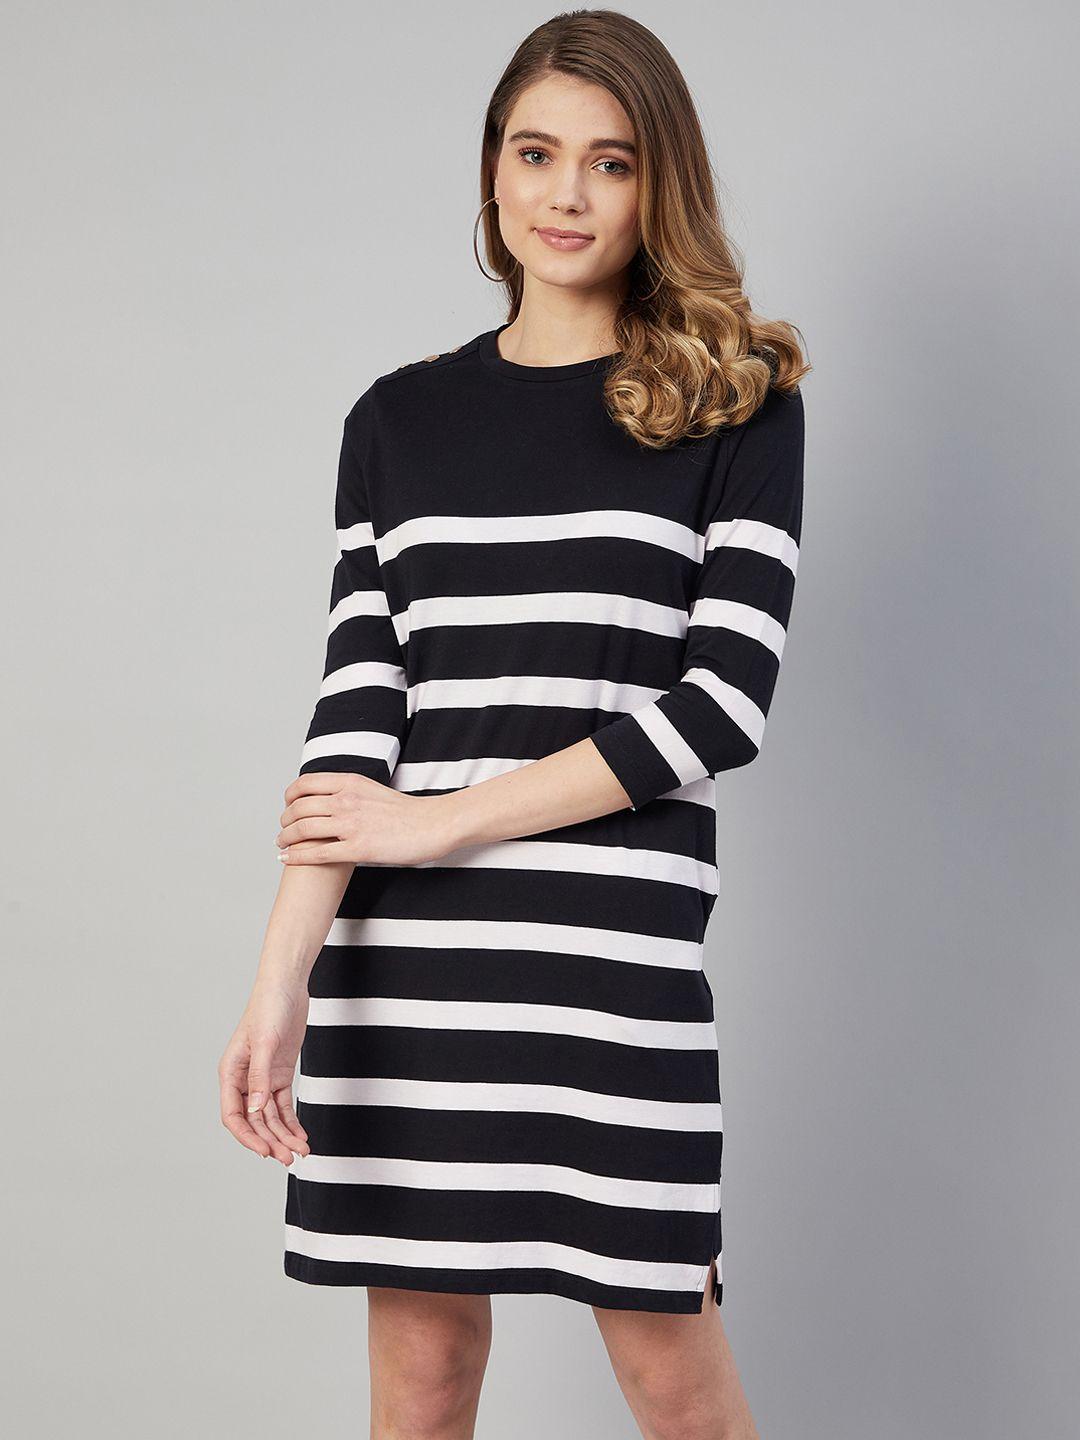 marks & spencer navy blue & white striped sheath mini dress